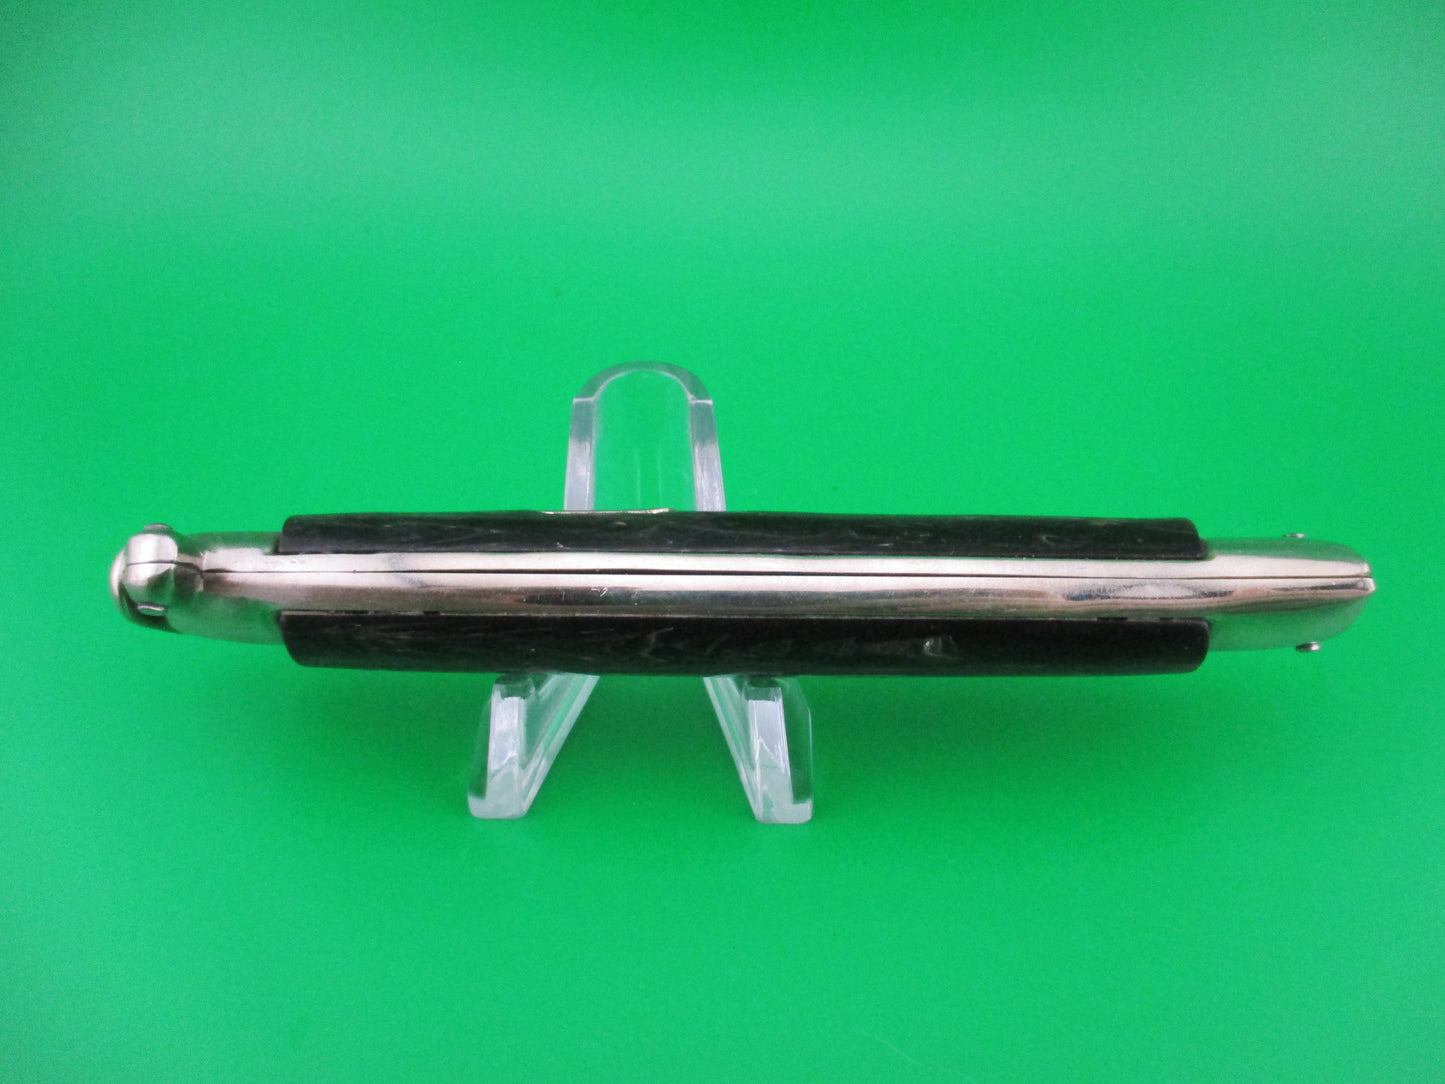 WANDY INOX DEPOSE 21cm Italian 1960s Trapdoor flush button automatic knife